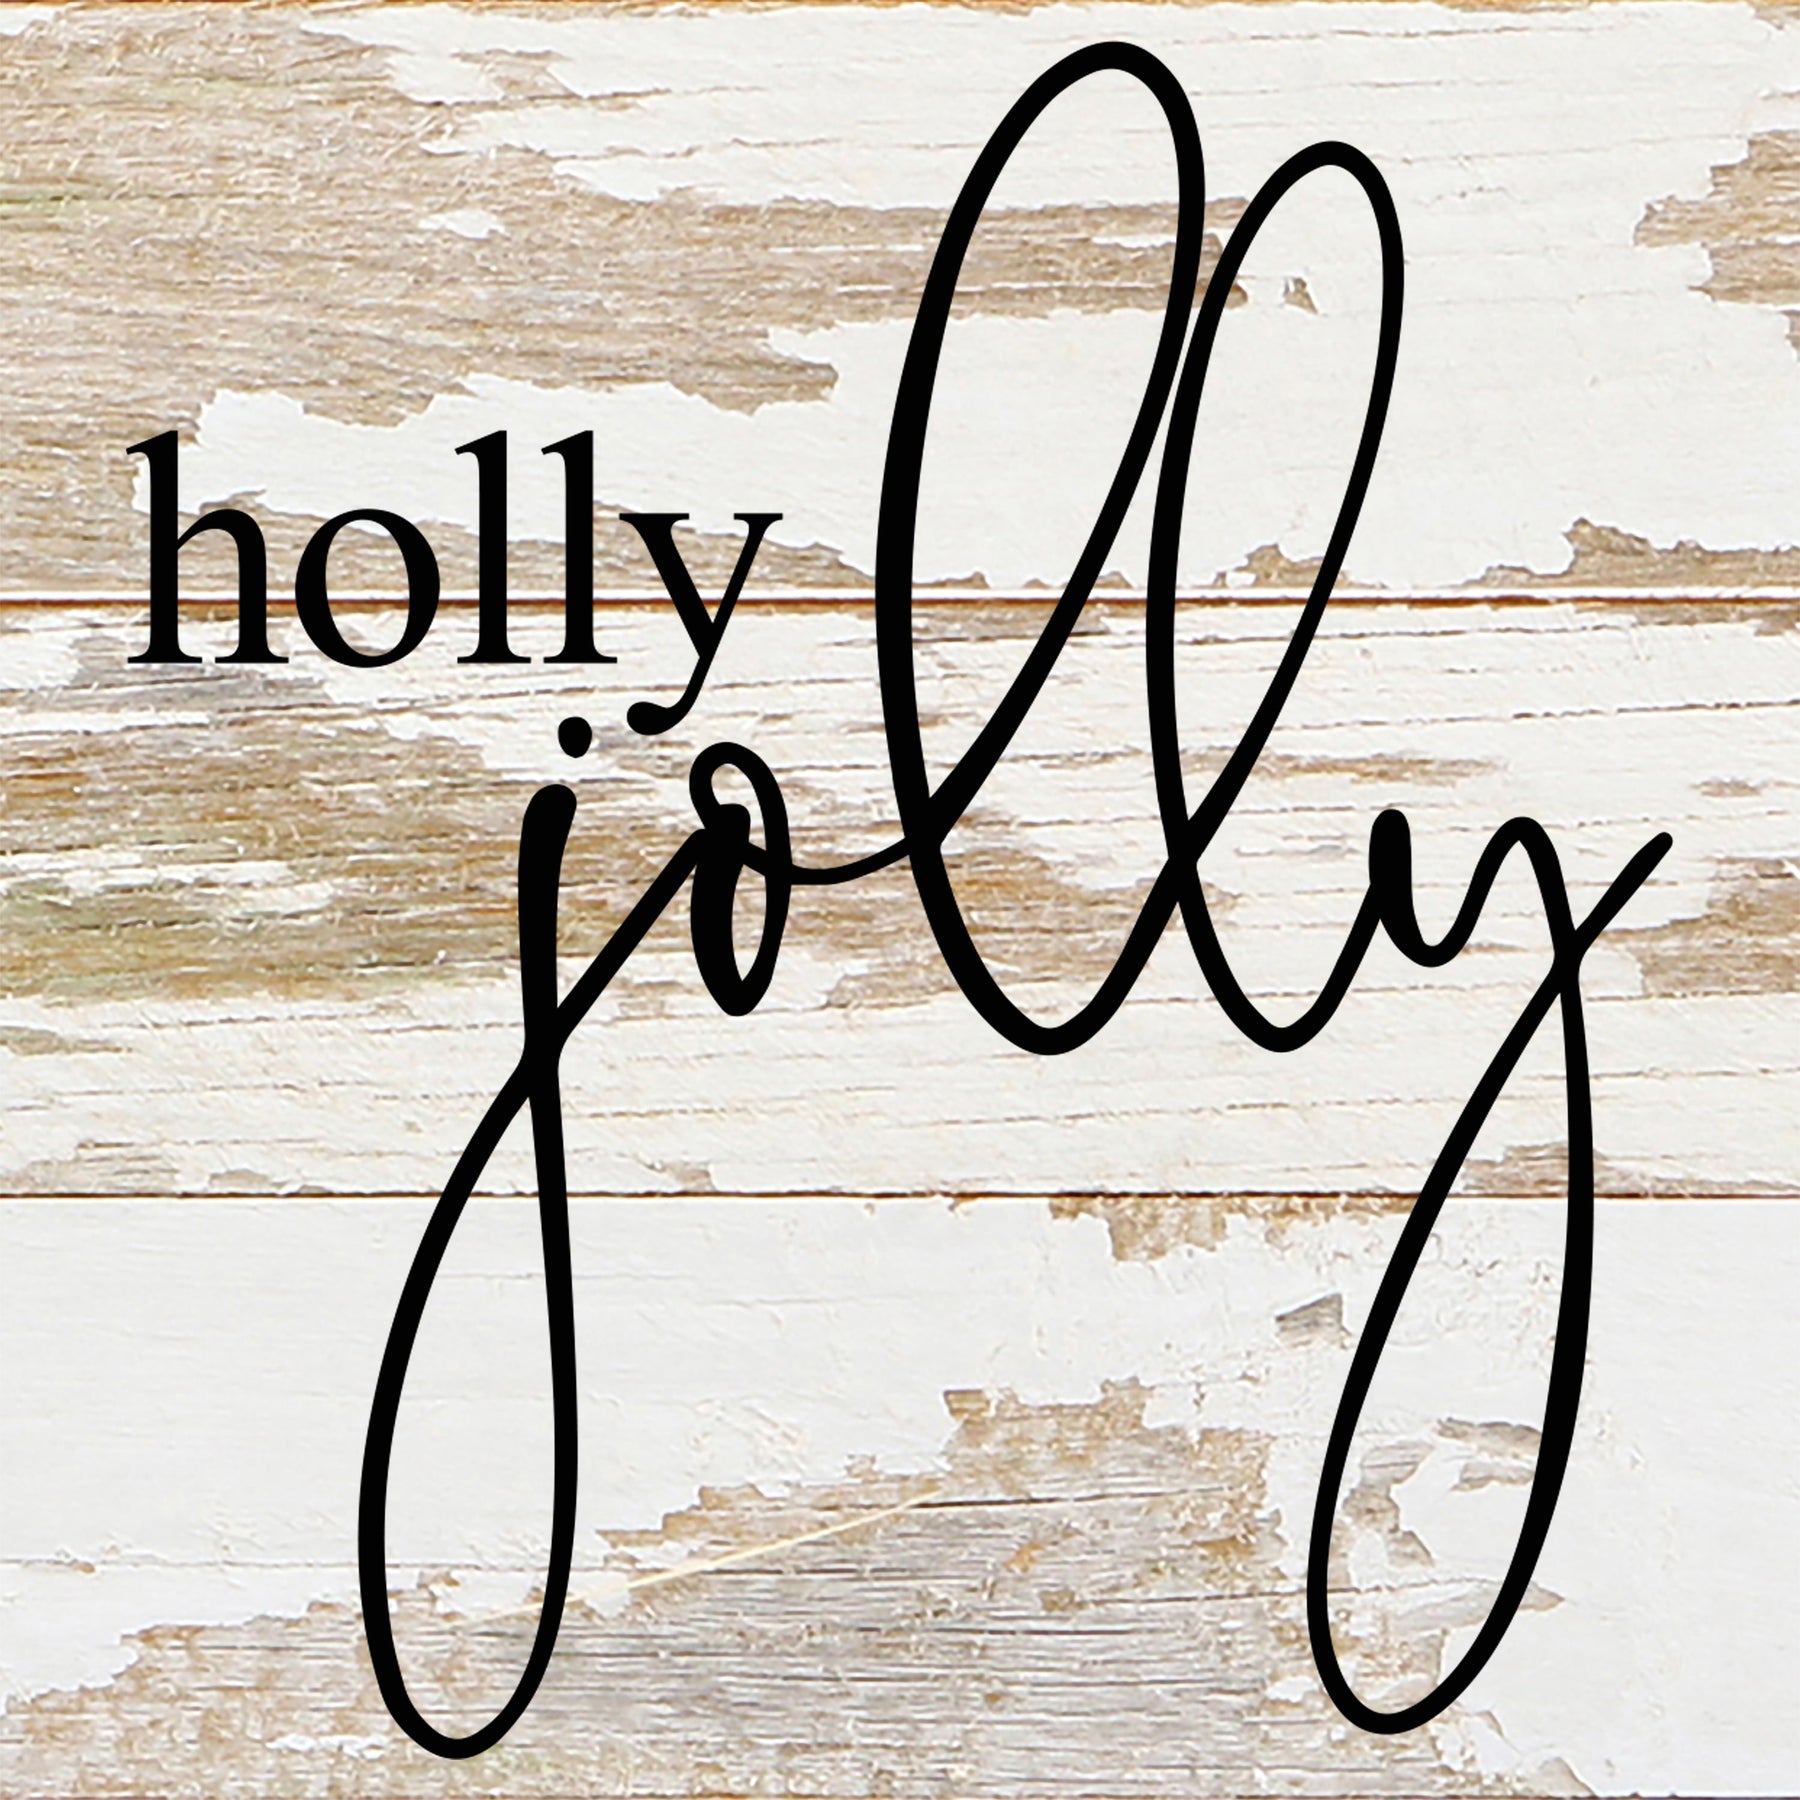 Holly jolly / 6"x6" Reclaimed Wood Sign